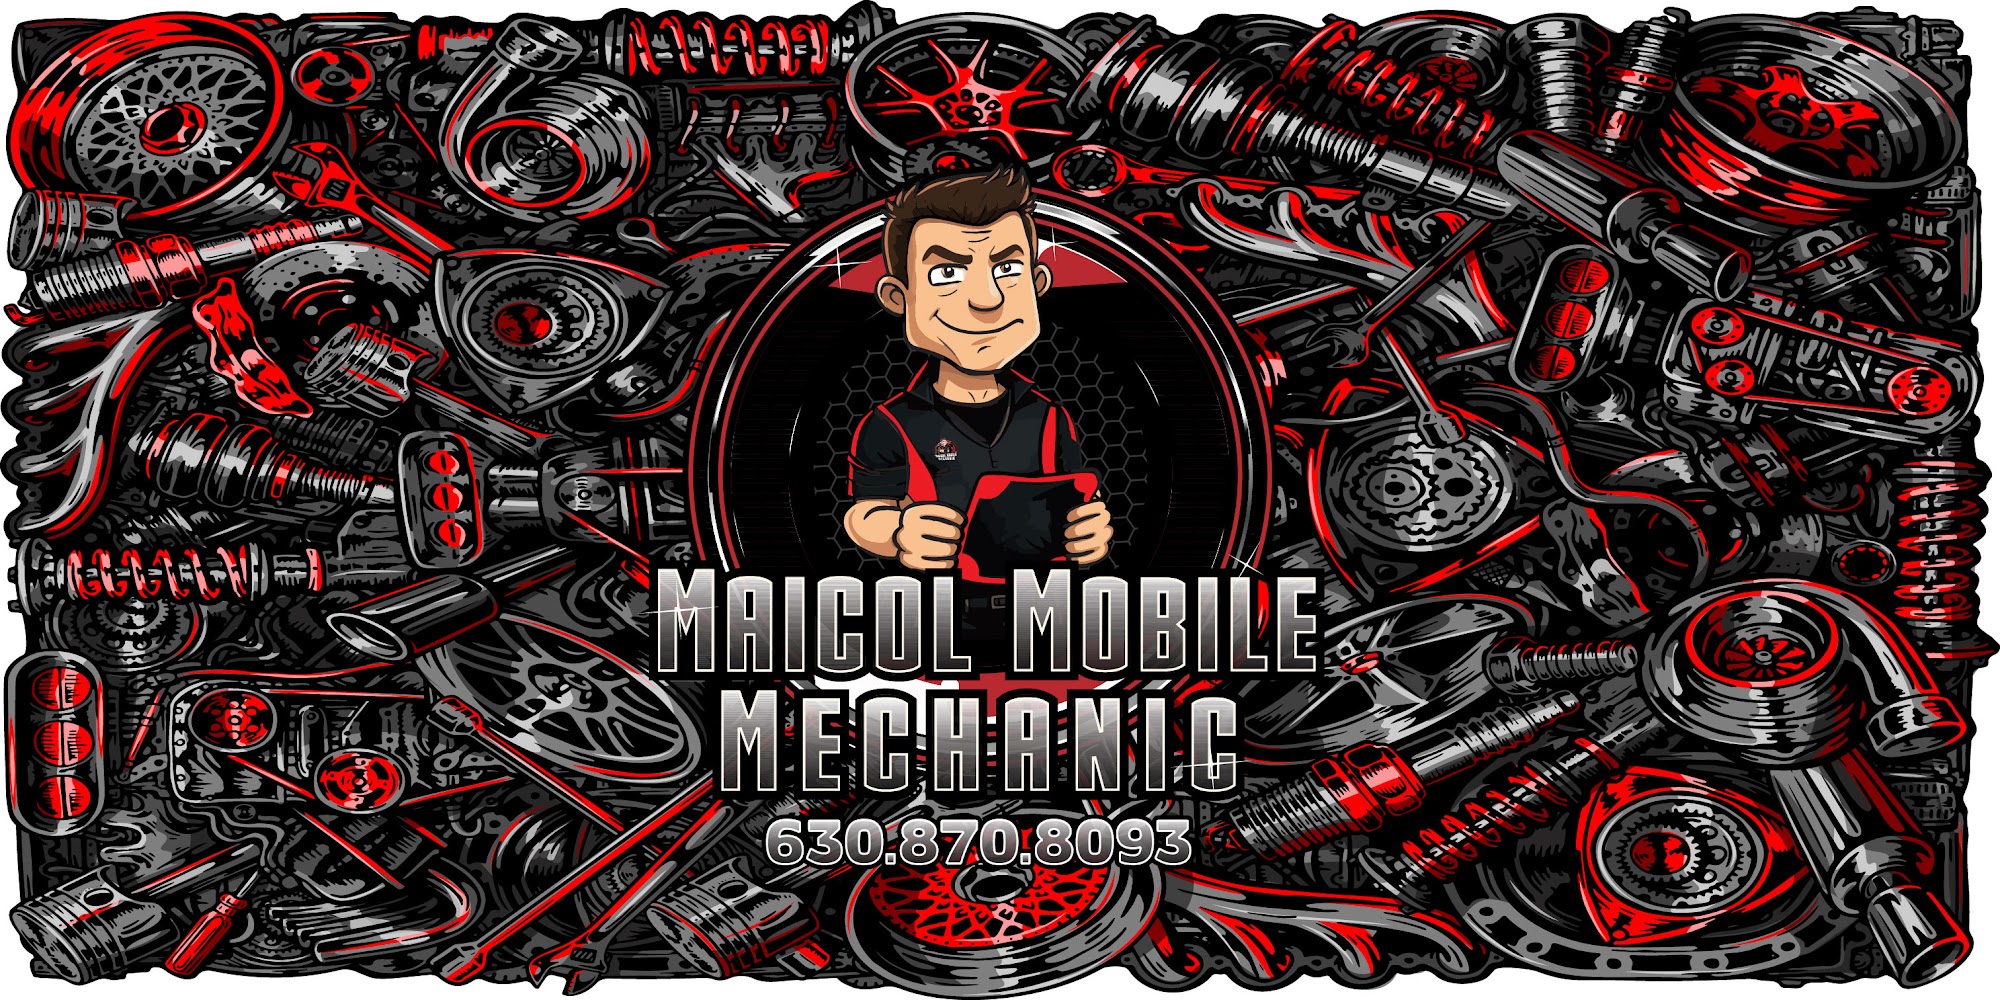 Maicol Mobile mechanic LLC